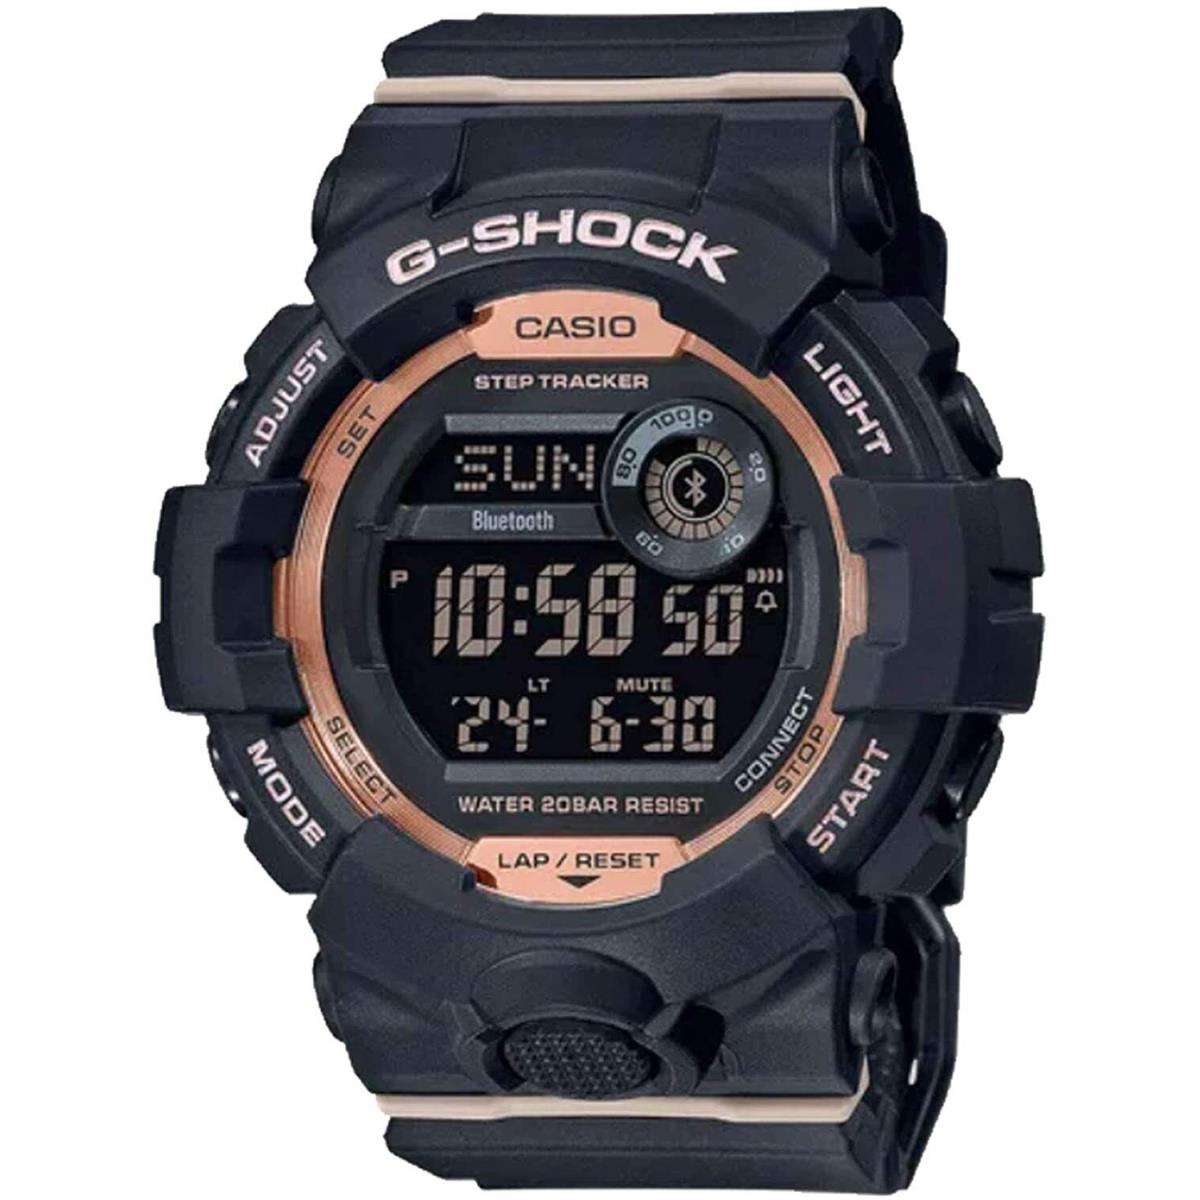 Casio G-shock Bluetooth Digital Watch Matte Black Resin GMDB-800-1 / GMDB800-1 - Black Band